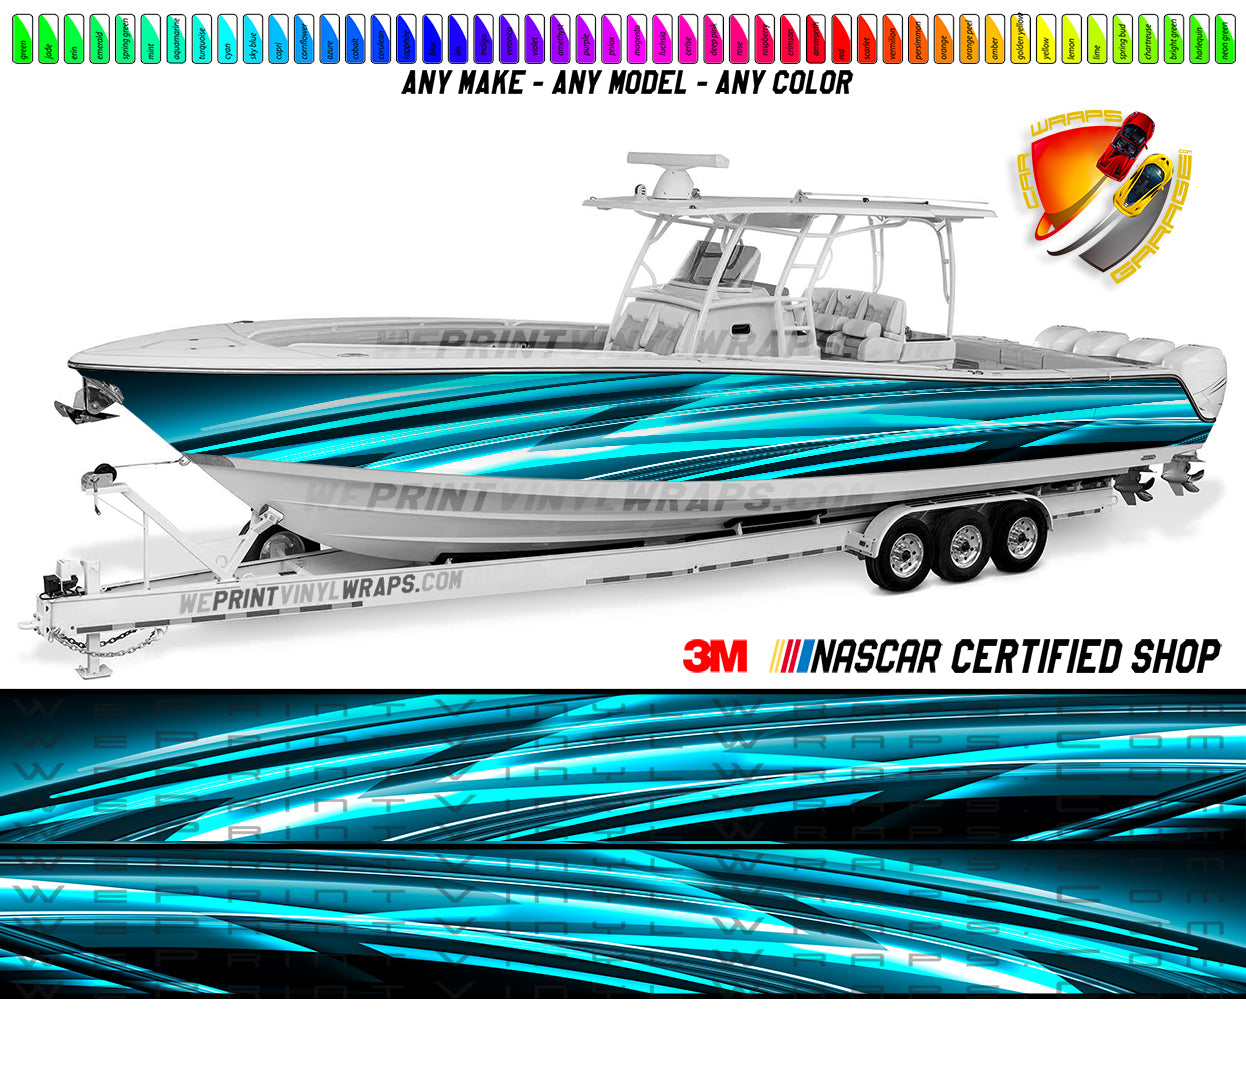 Aqua and Black Lines Graphic Vinyl Boat Wrap Decal Fishing